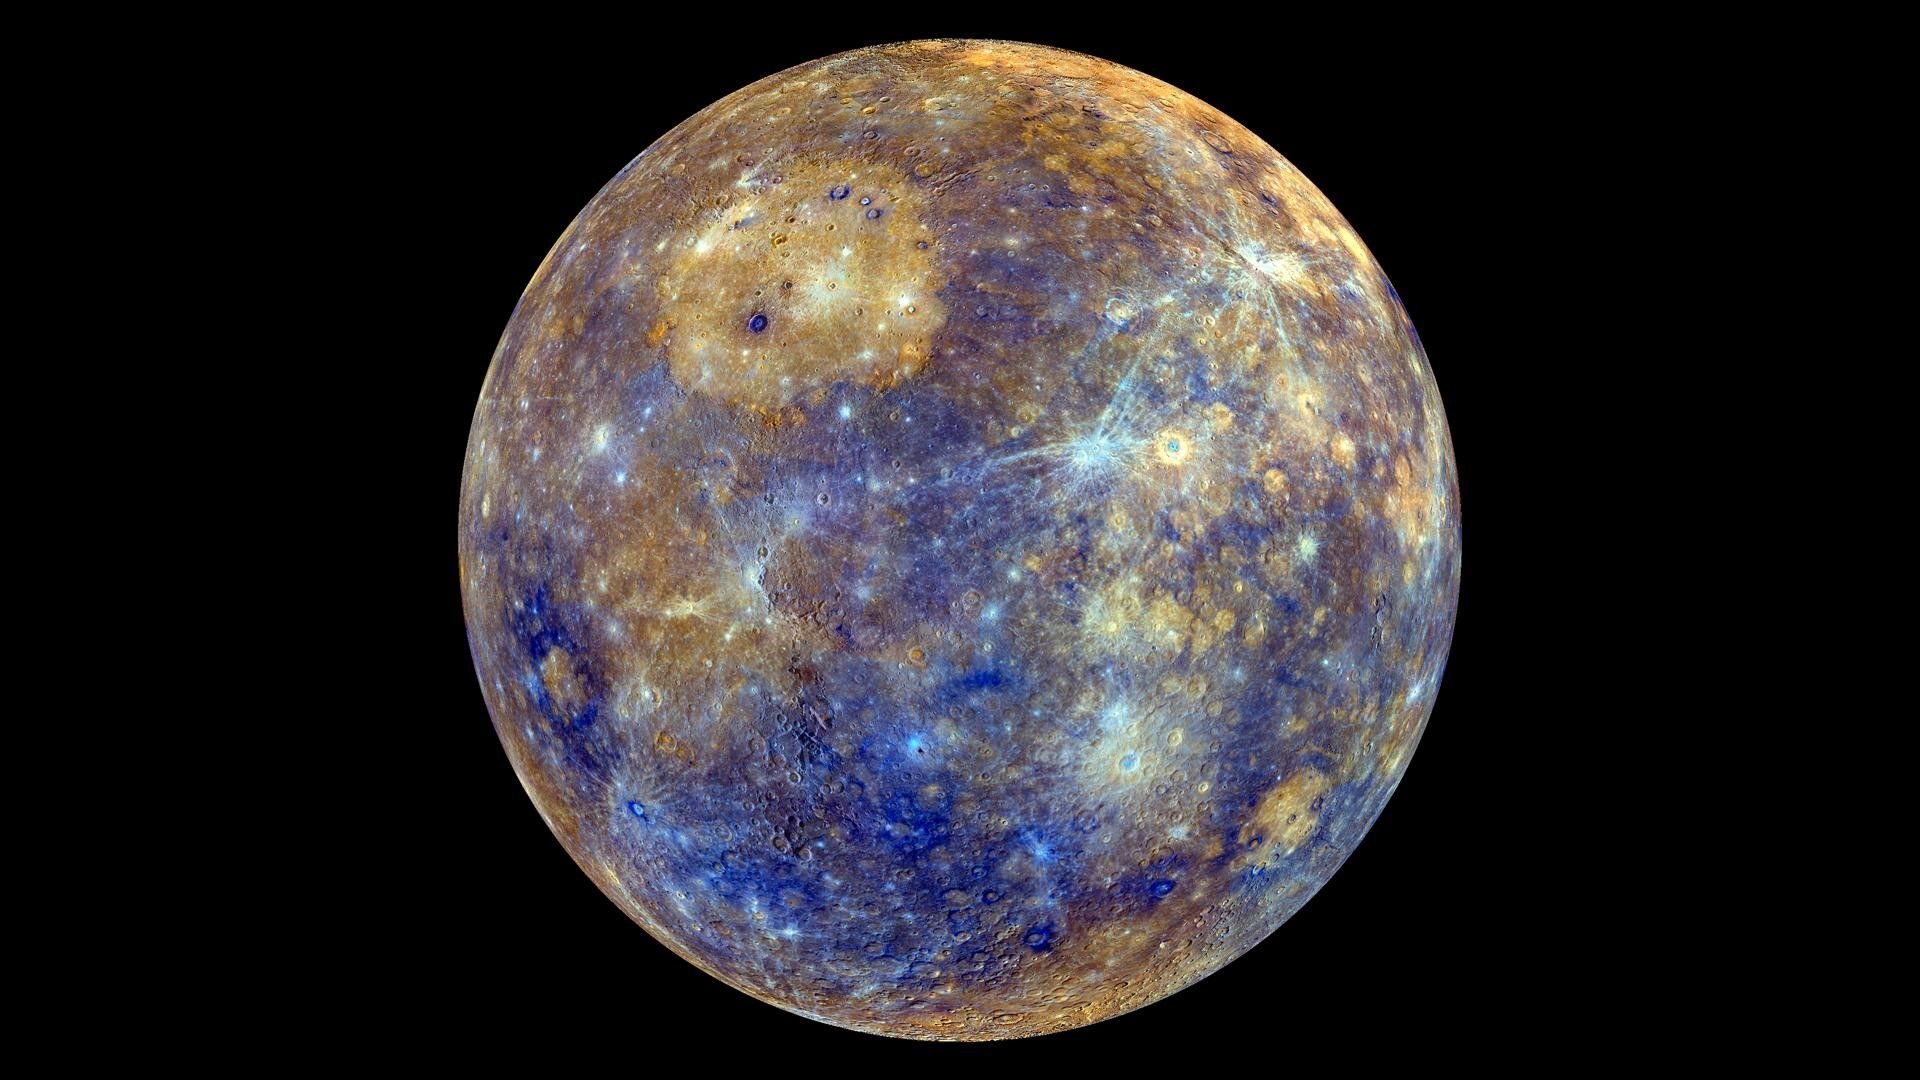 1920x1080 space planet mercury messenger wallpaper JPG 325 kB